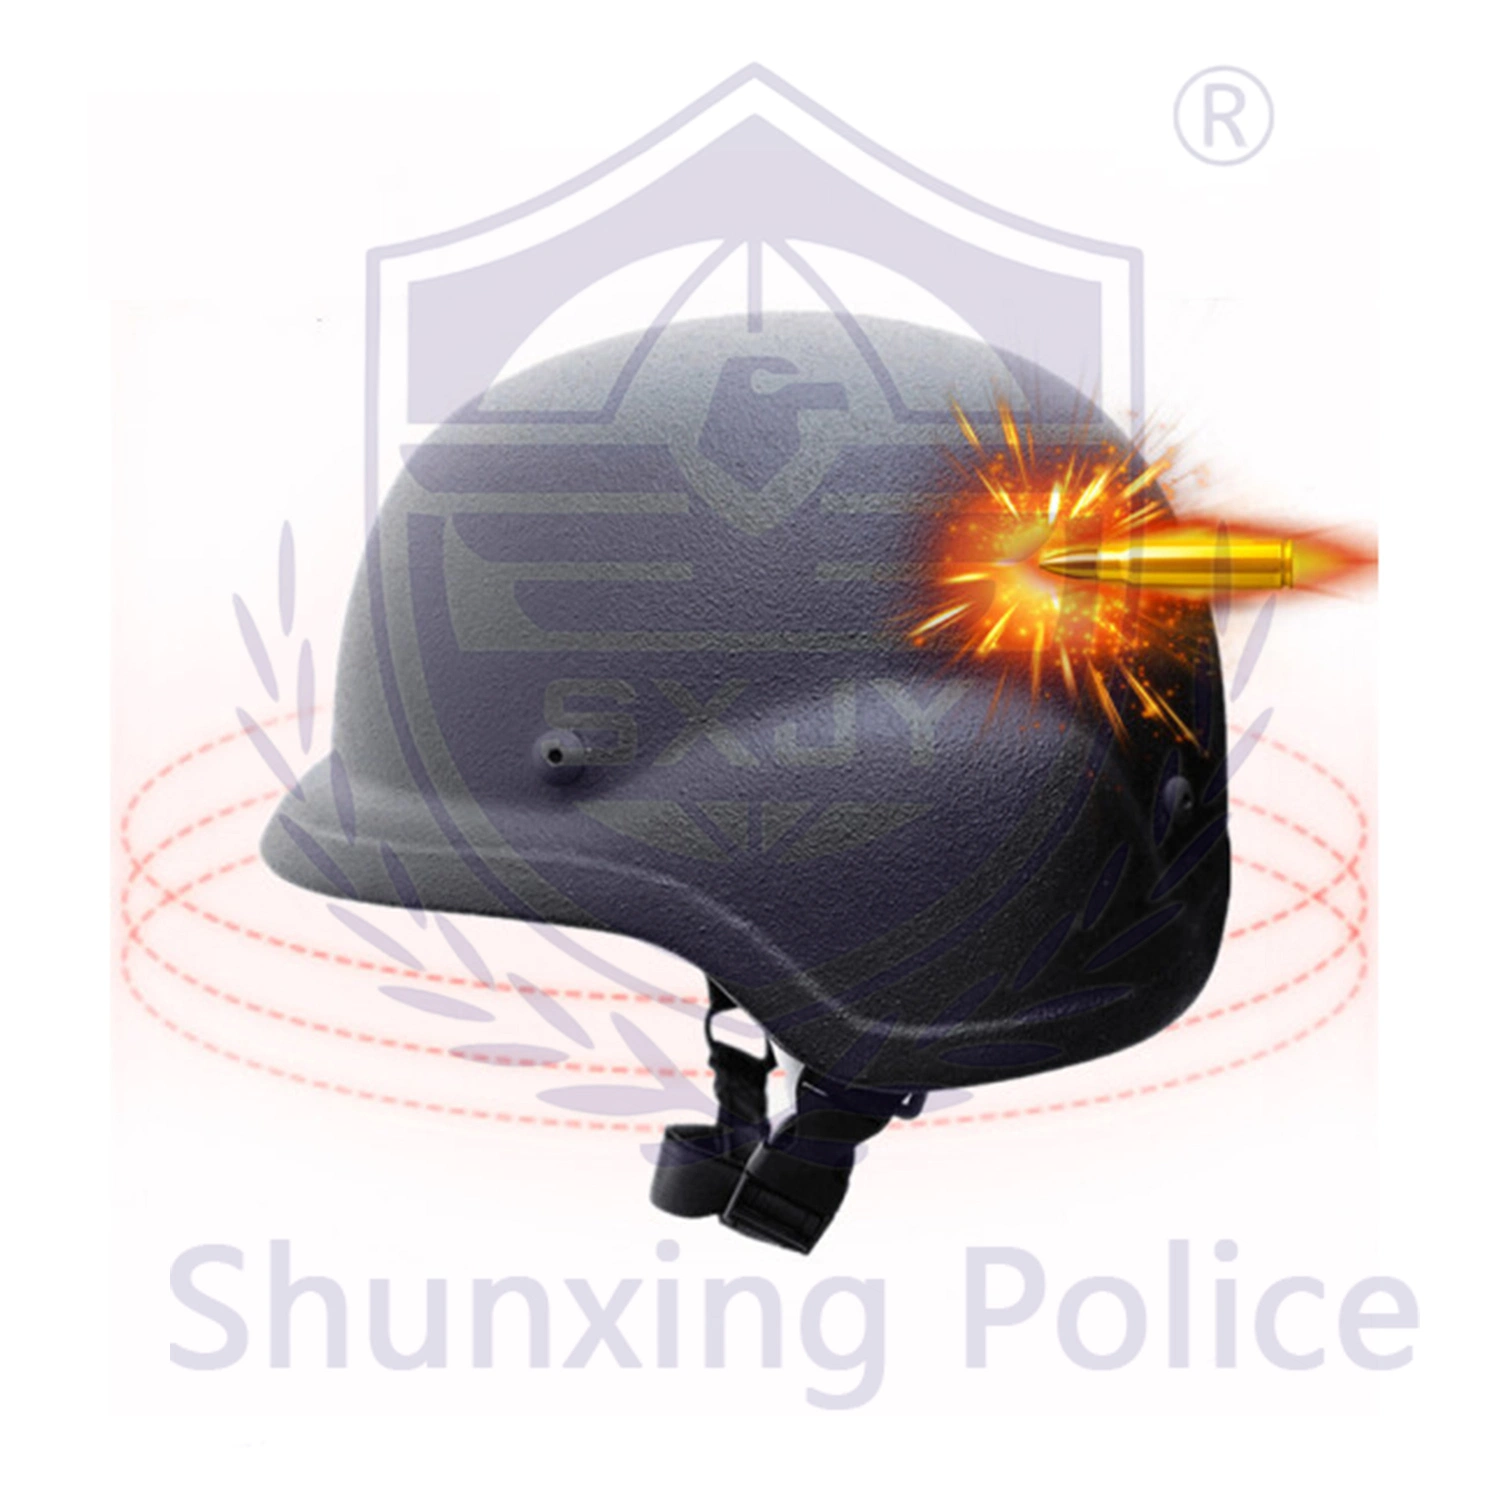 Level 3 PE Bulletproof Helmet, Safety Protection Helmet, Tactical Helmet, Tactical Equipment Helmet